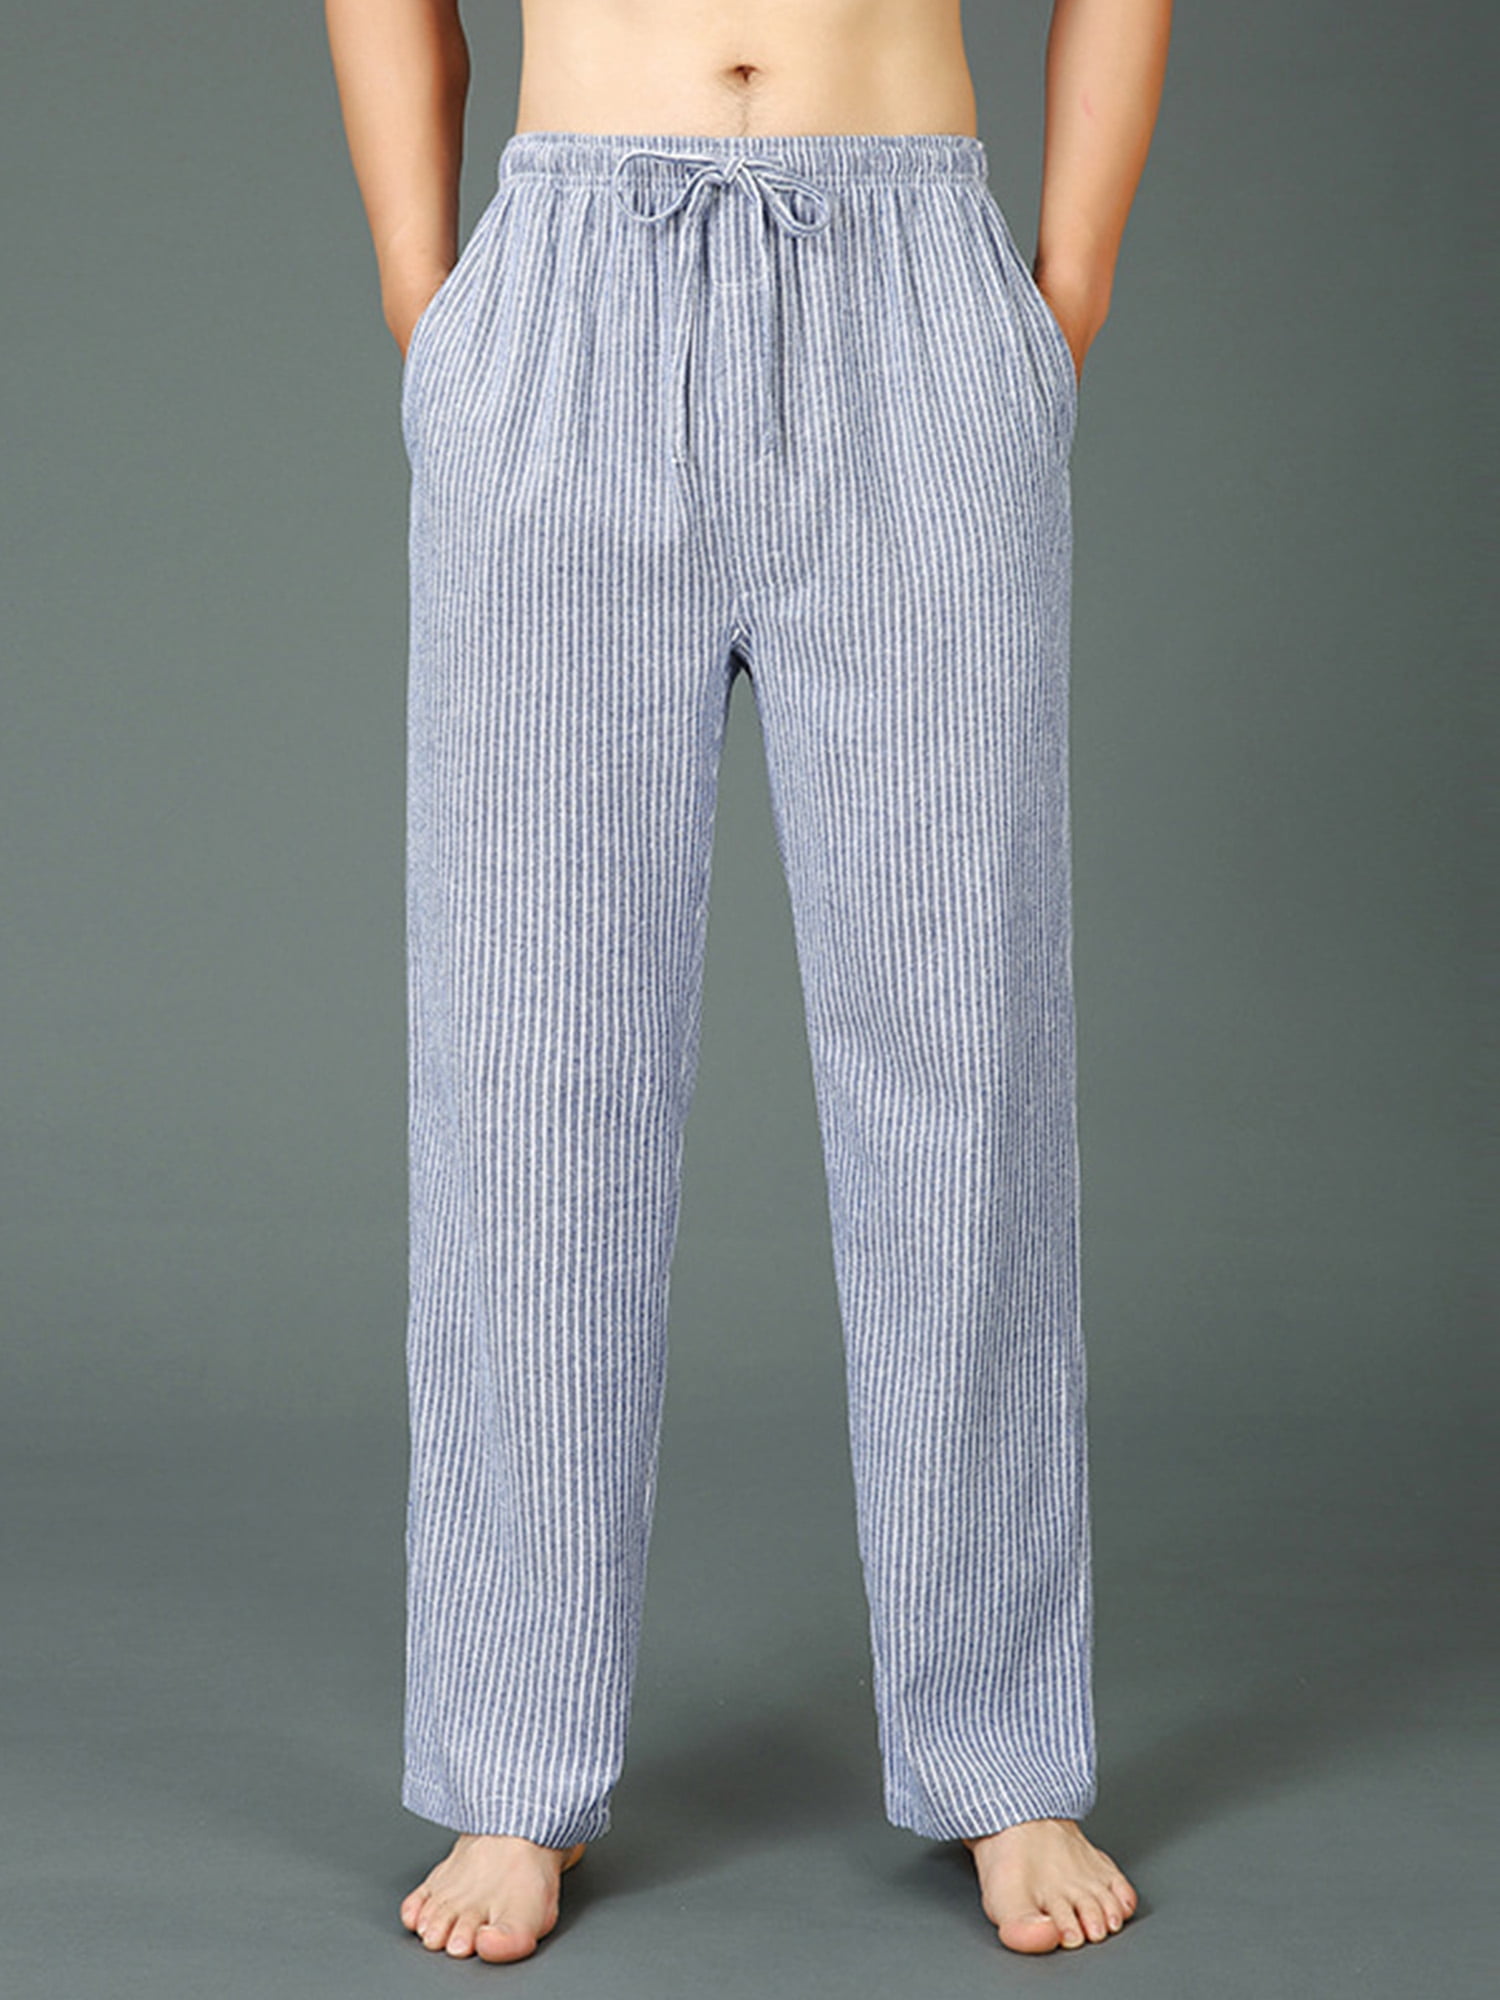 Aibrou Women Pajama Pants Cotton Striped Pajama Bottoms Sleep Pants